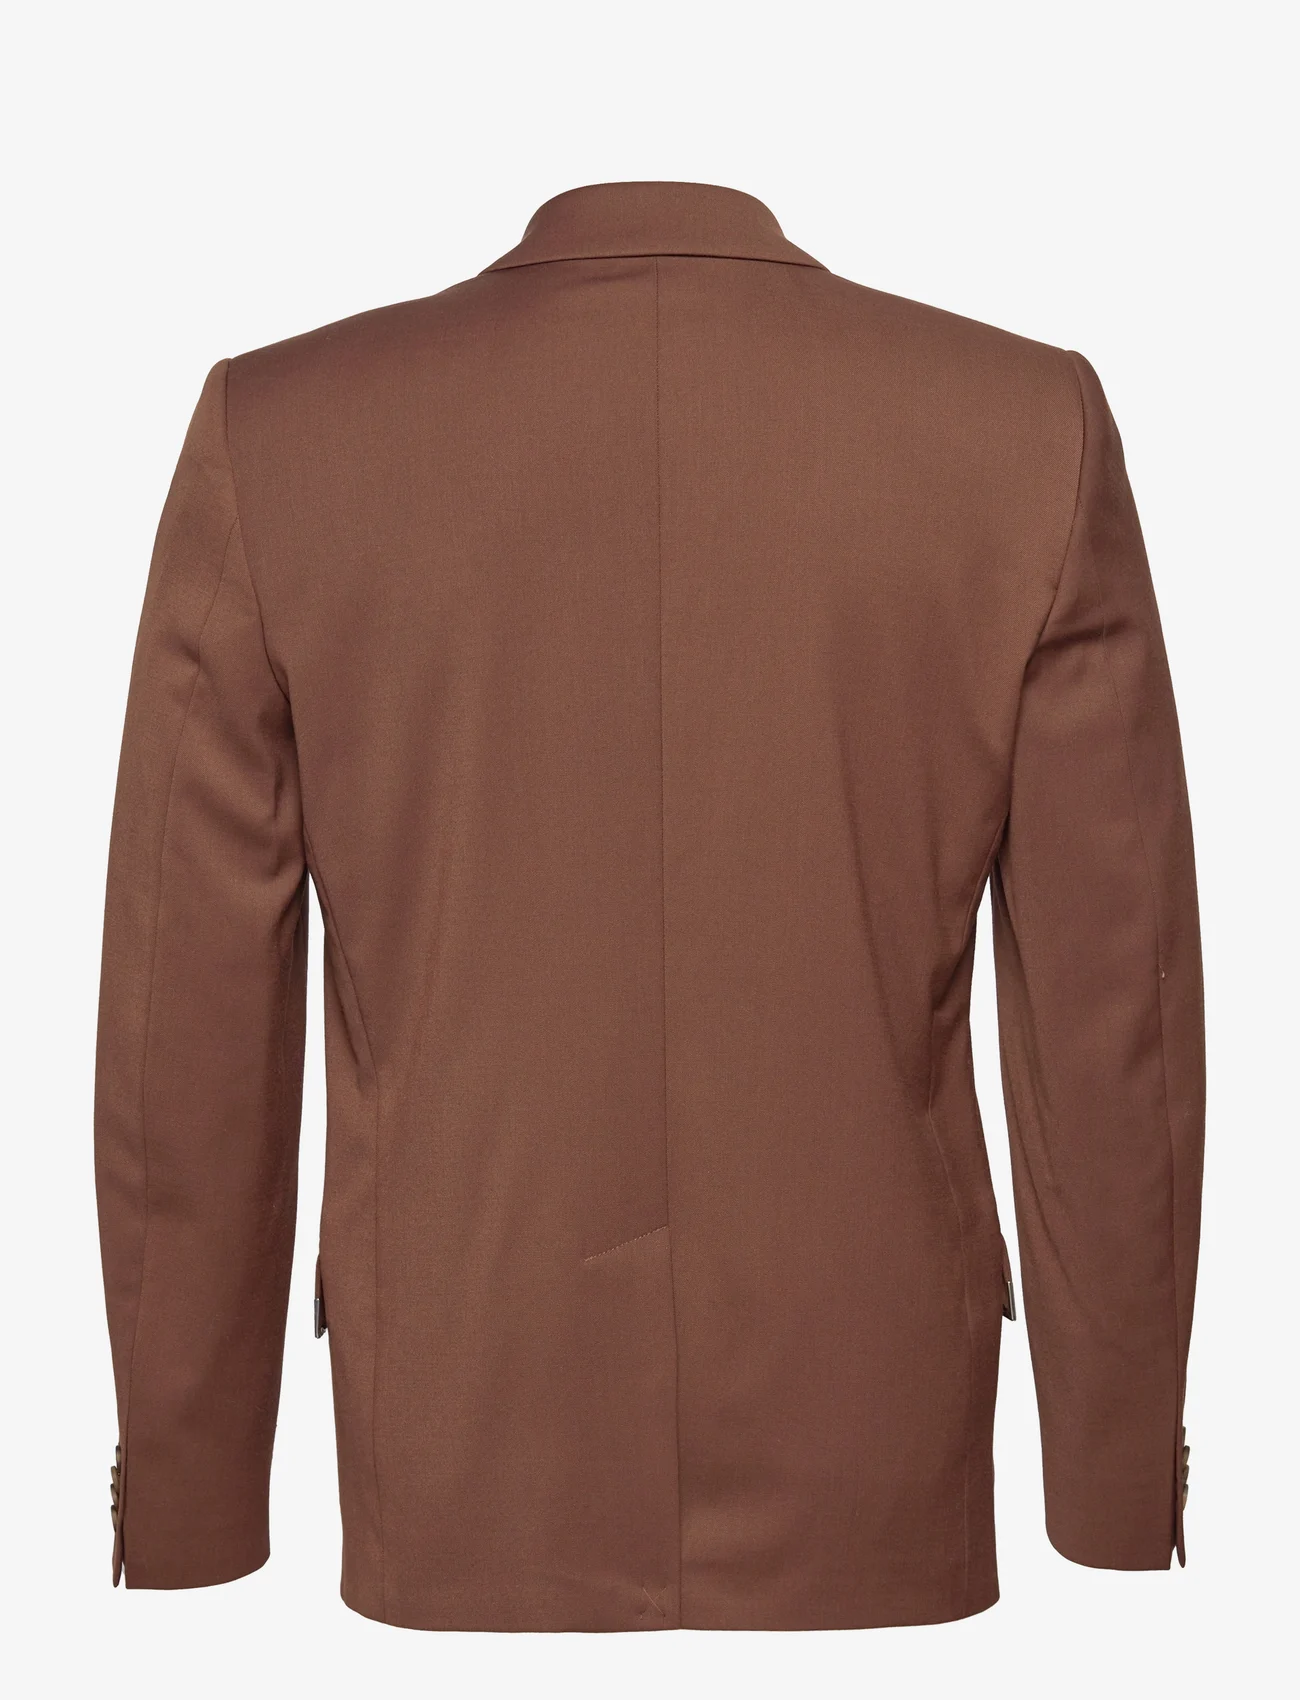 HAN Kjøbenhavn - Single Suit Blazer - dobbeltspente blazere - brown - 1